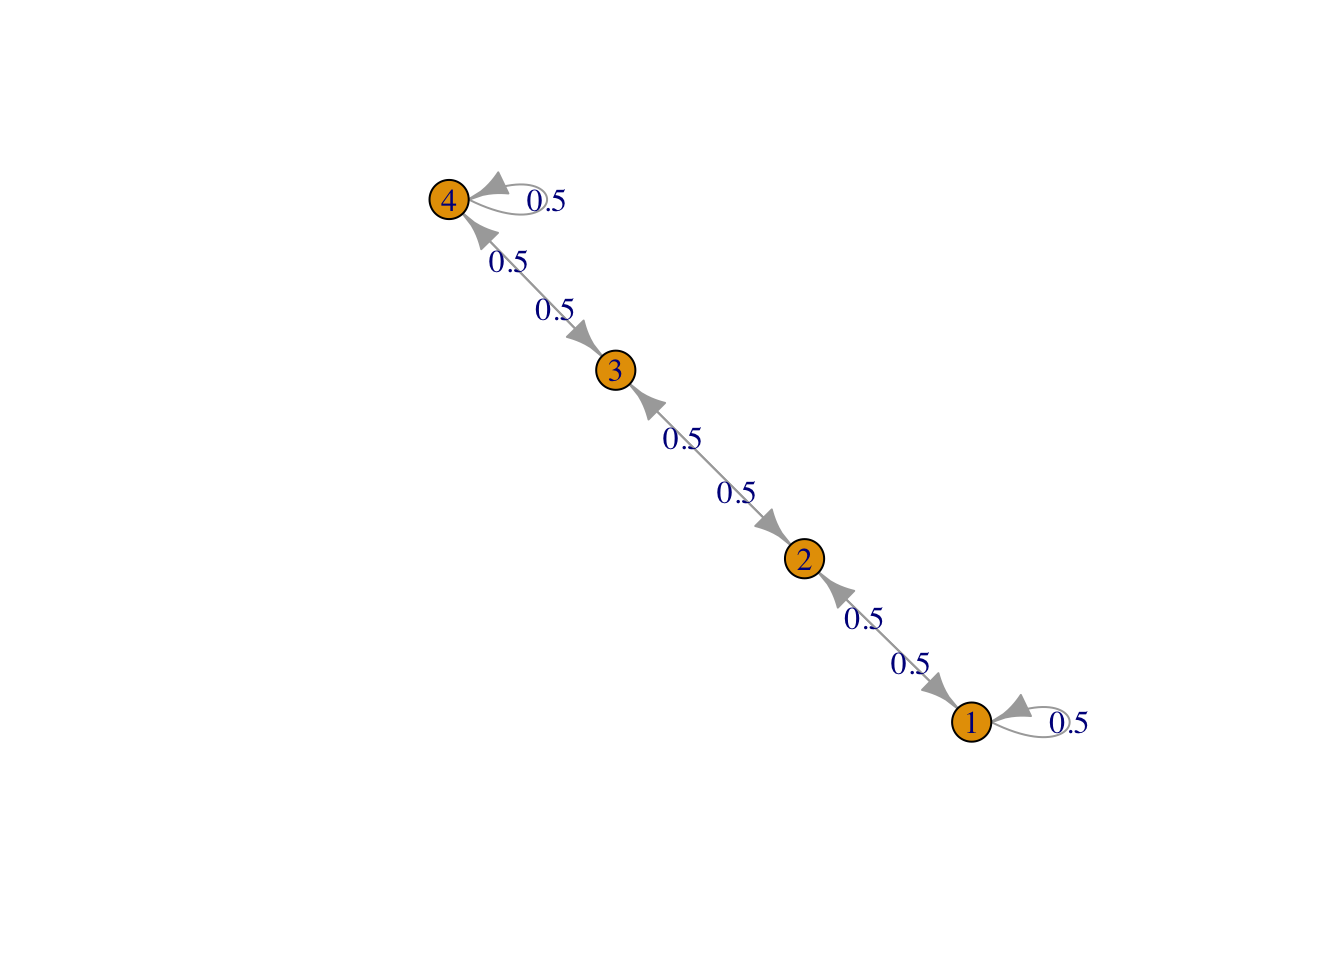 Row 1, line graph